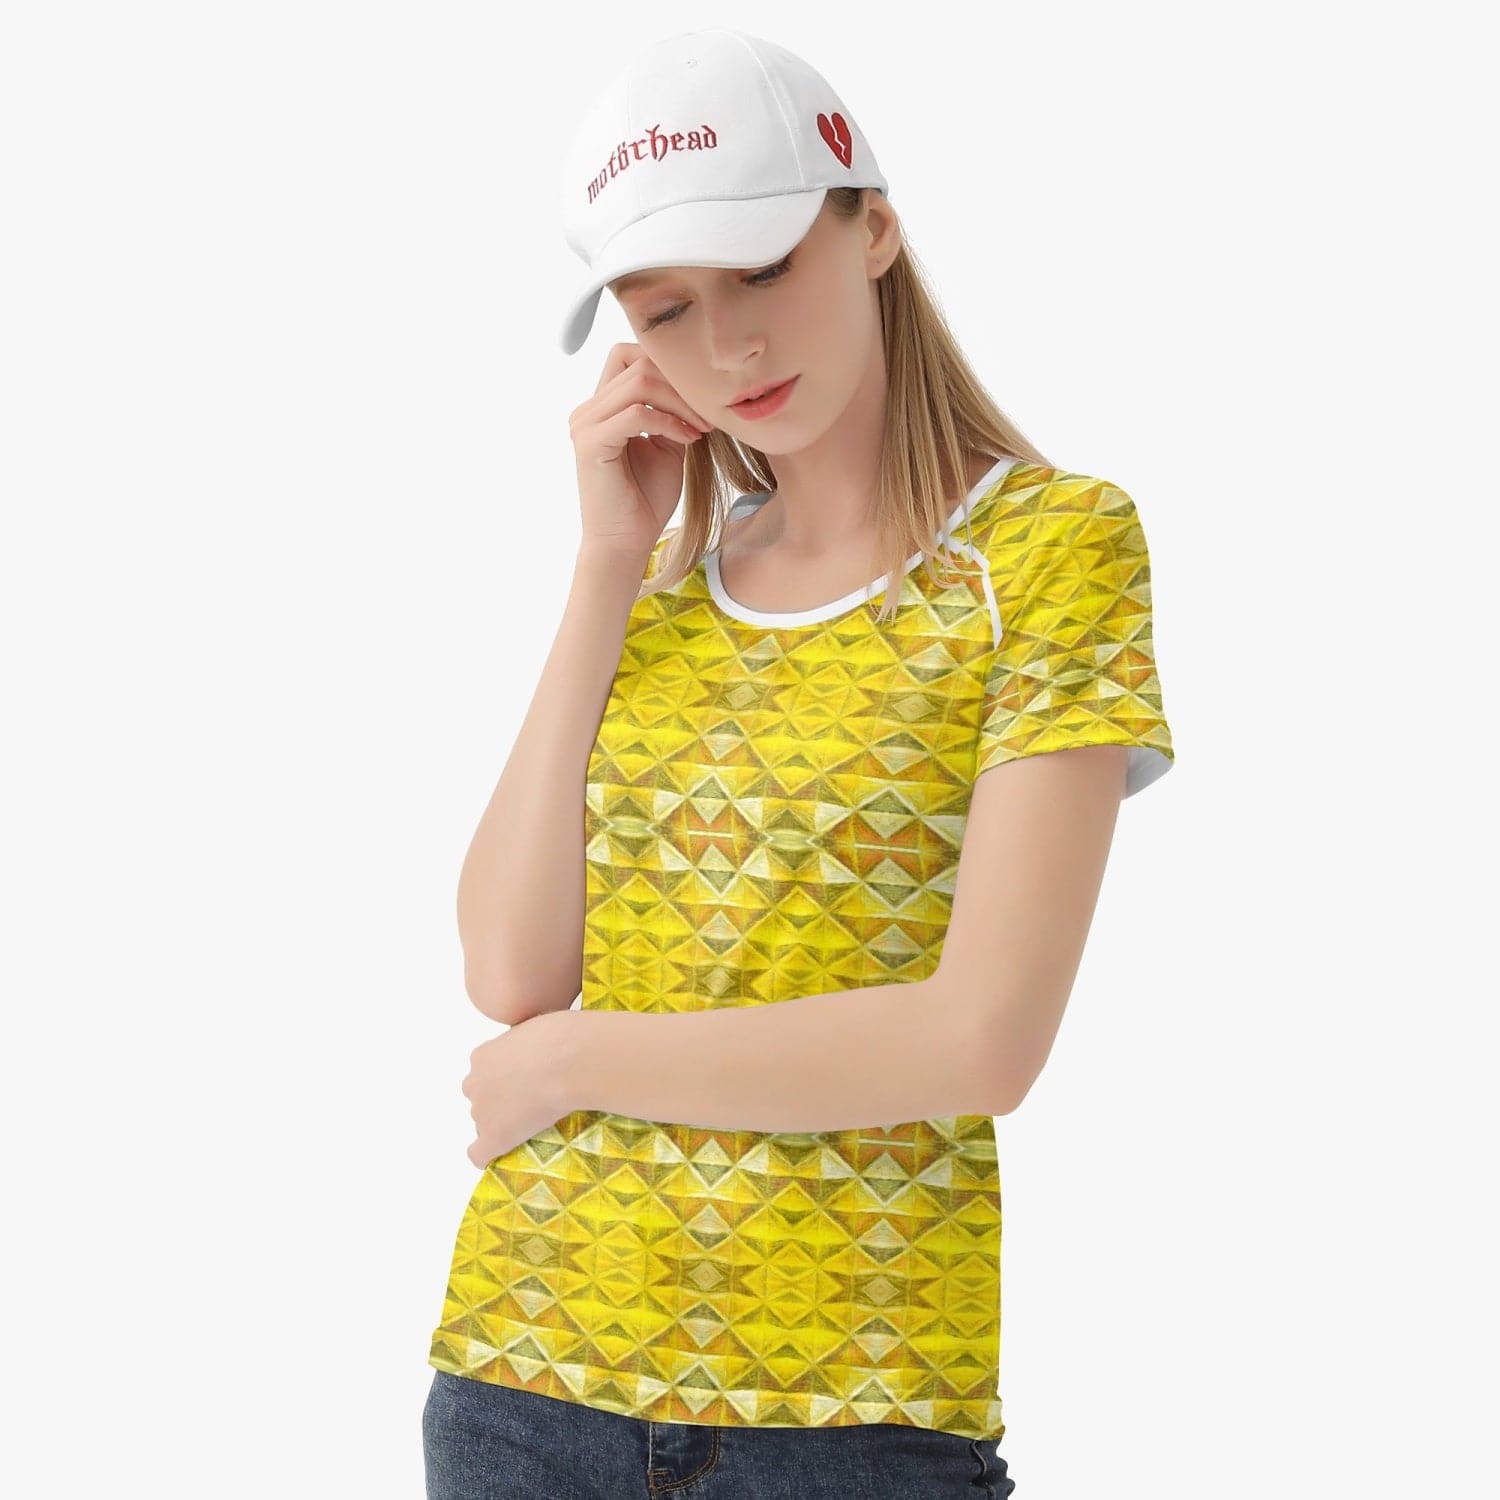 Connecting the True Purpose of Being Yellow Beautiful, Handmade  Women T-shirt Sports/ Yoga Top, by Sensus Studio Design